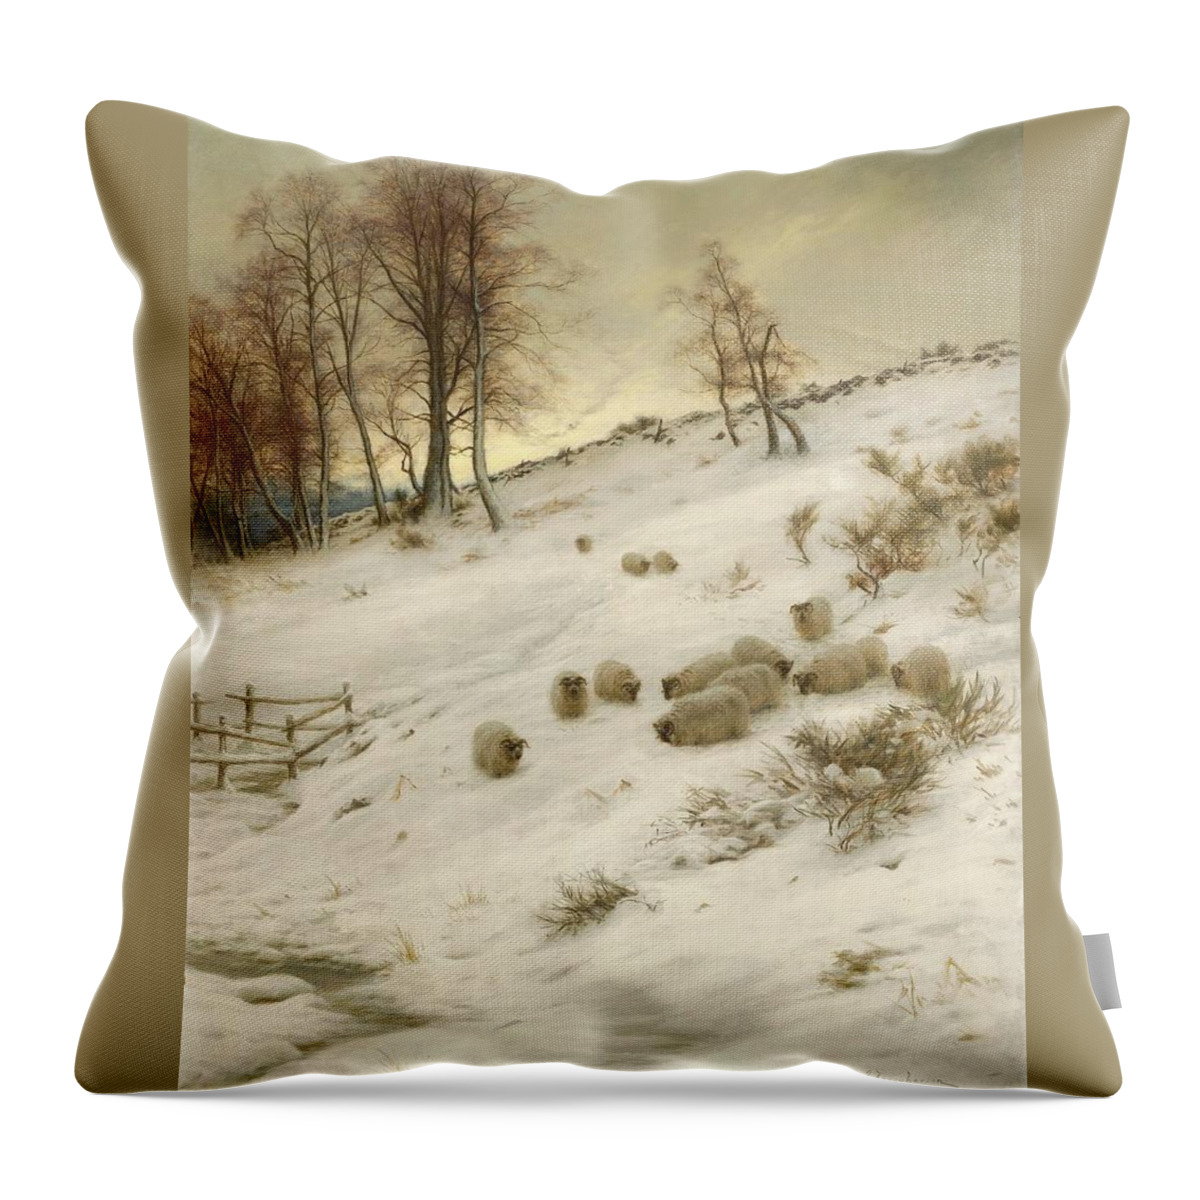 A Flock Of Sheep In A Snowstorm Throw Pillow featuring the painting A Flock of Sheep in a Snowstorm #9 by Joseph Farquharson